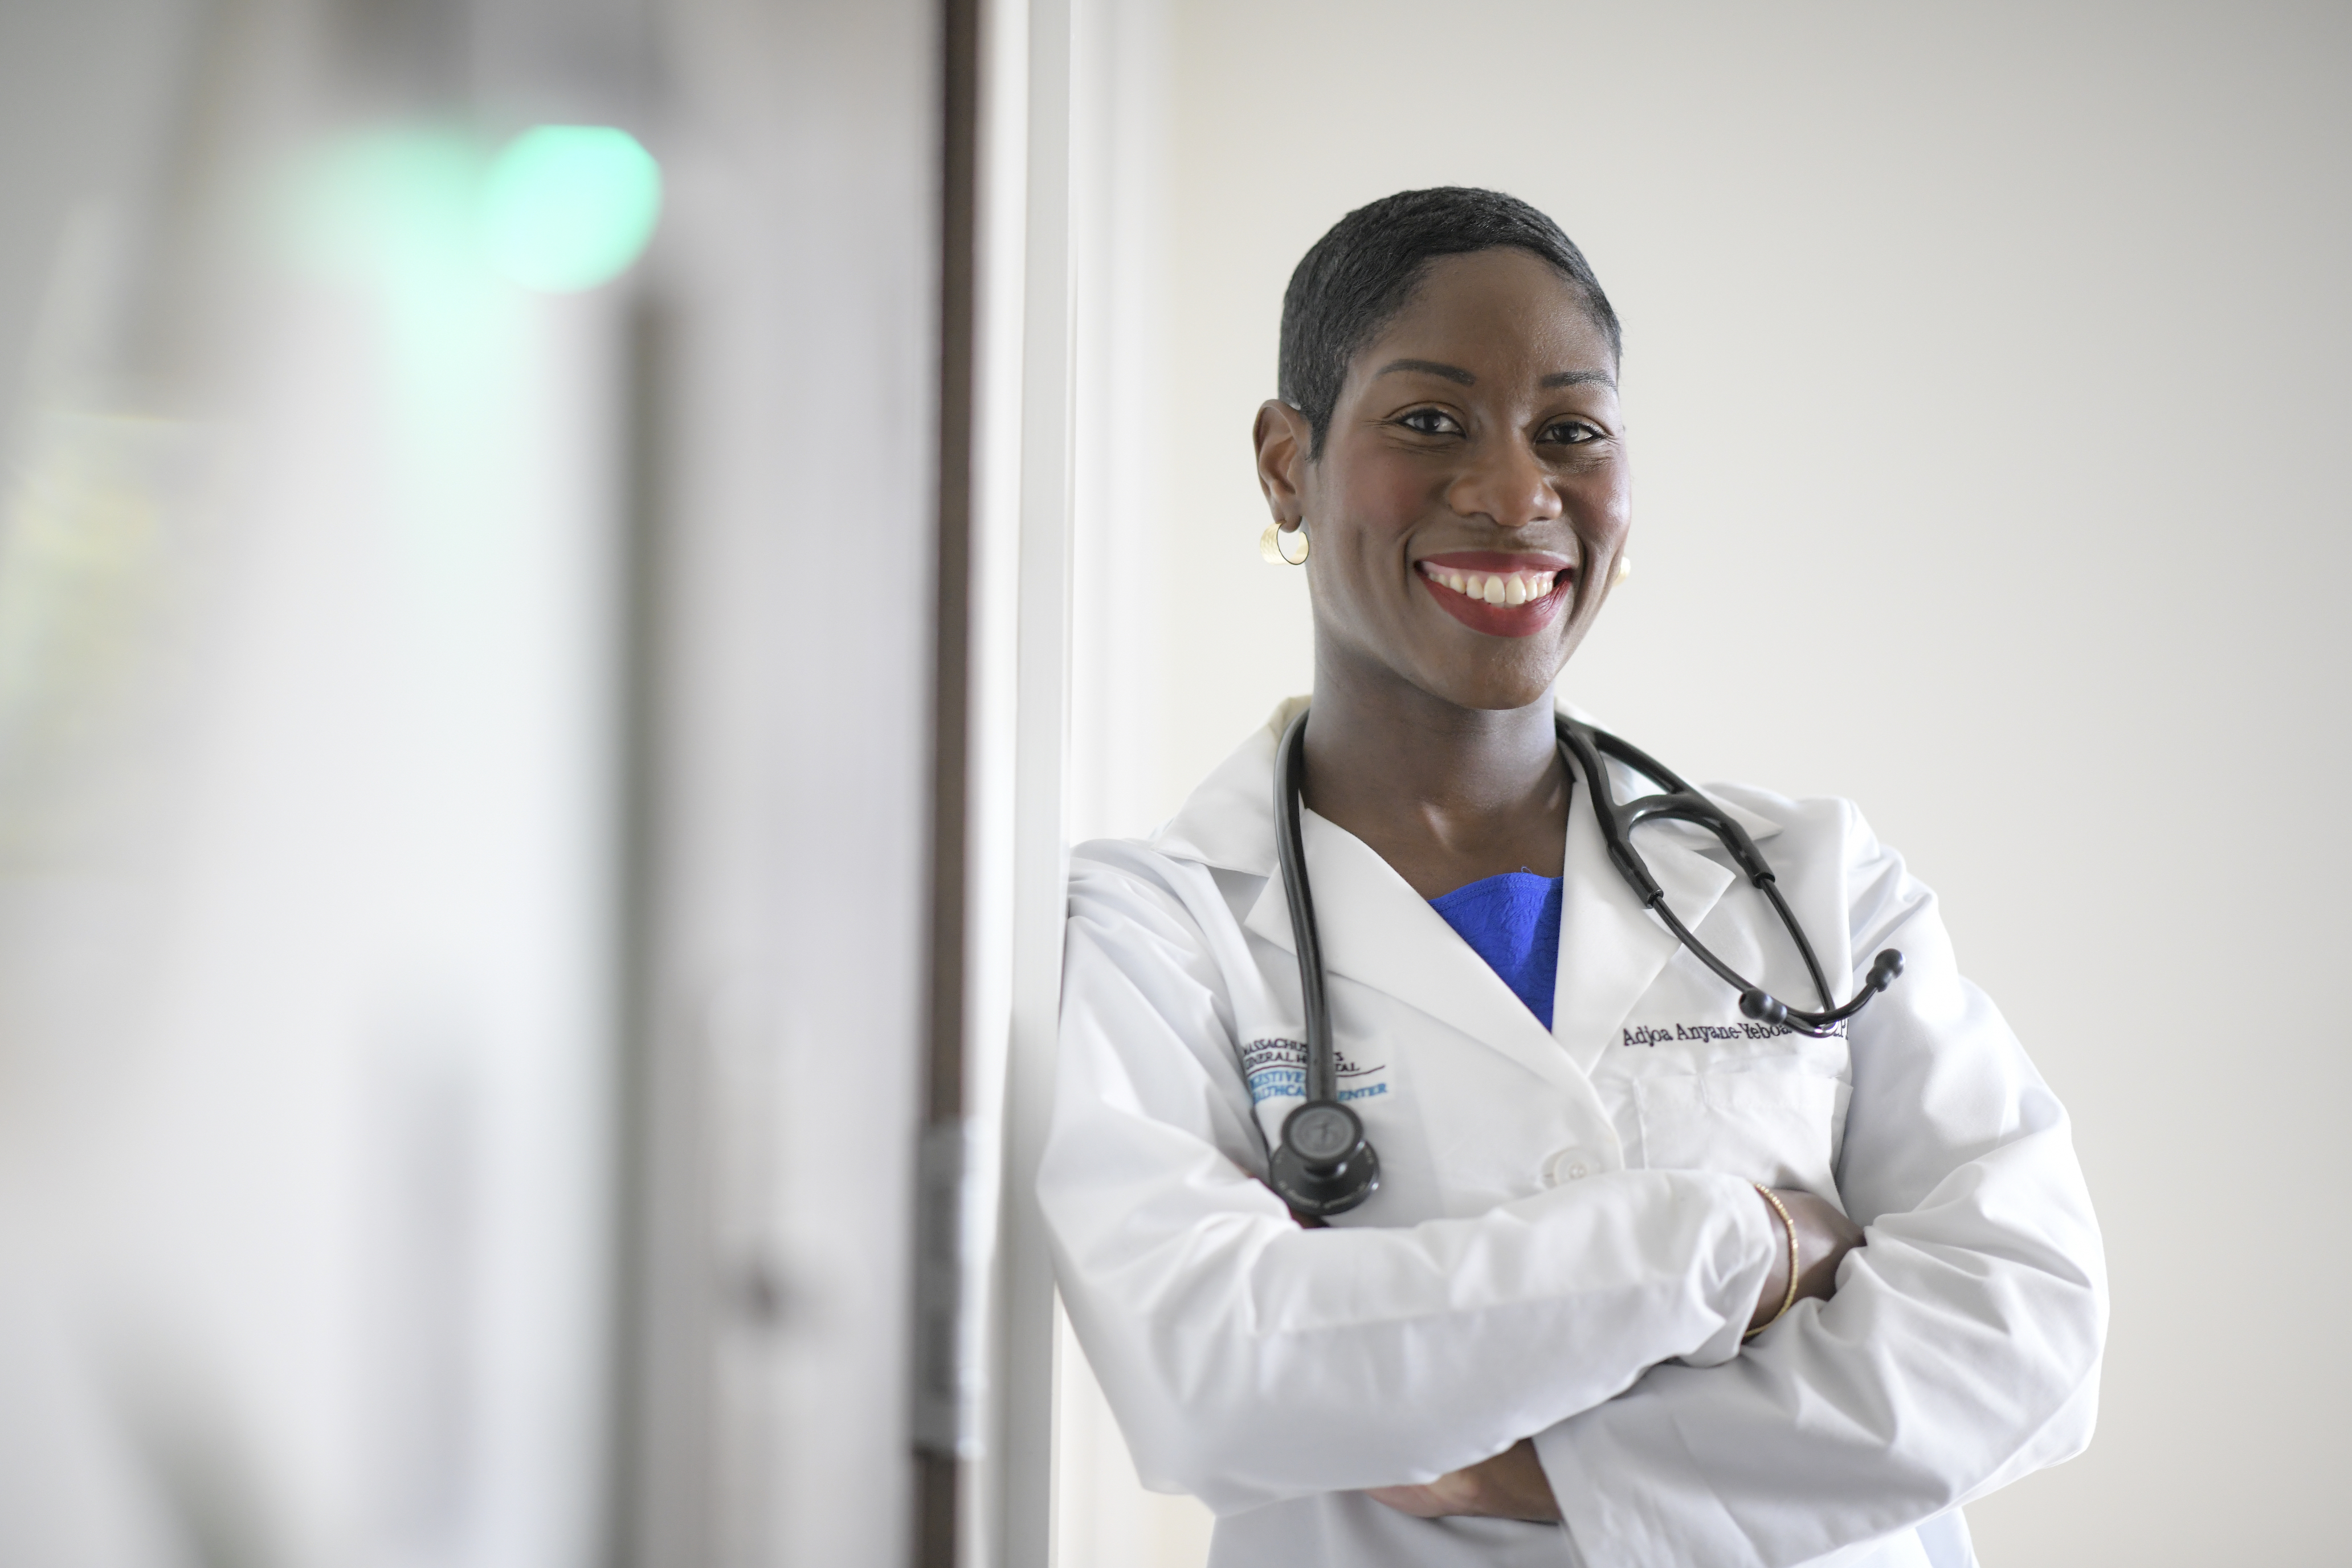 Dr. Anyane-Yeboa